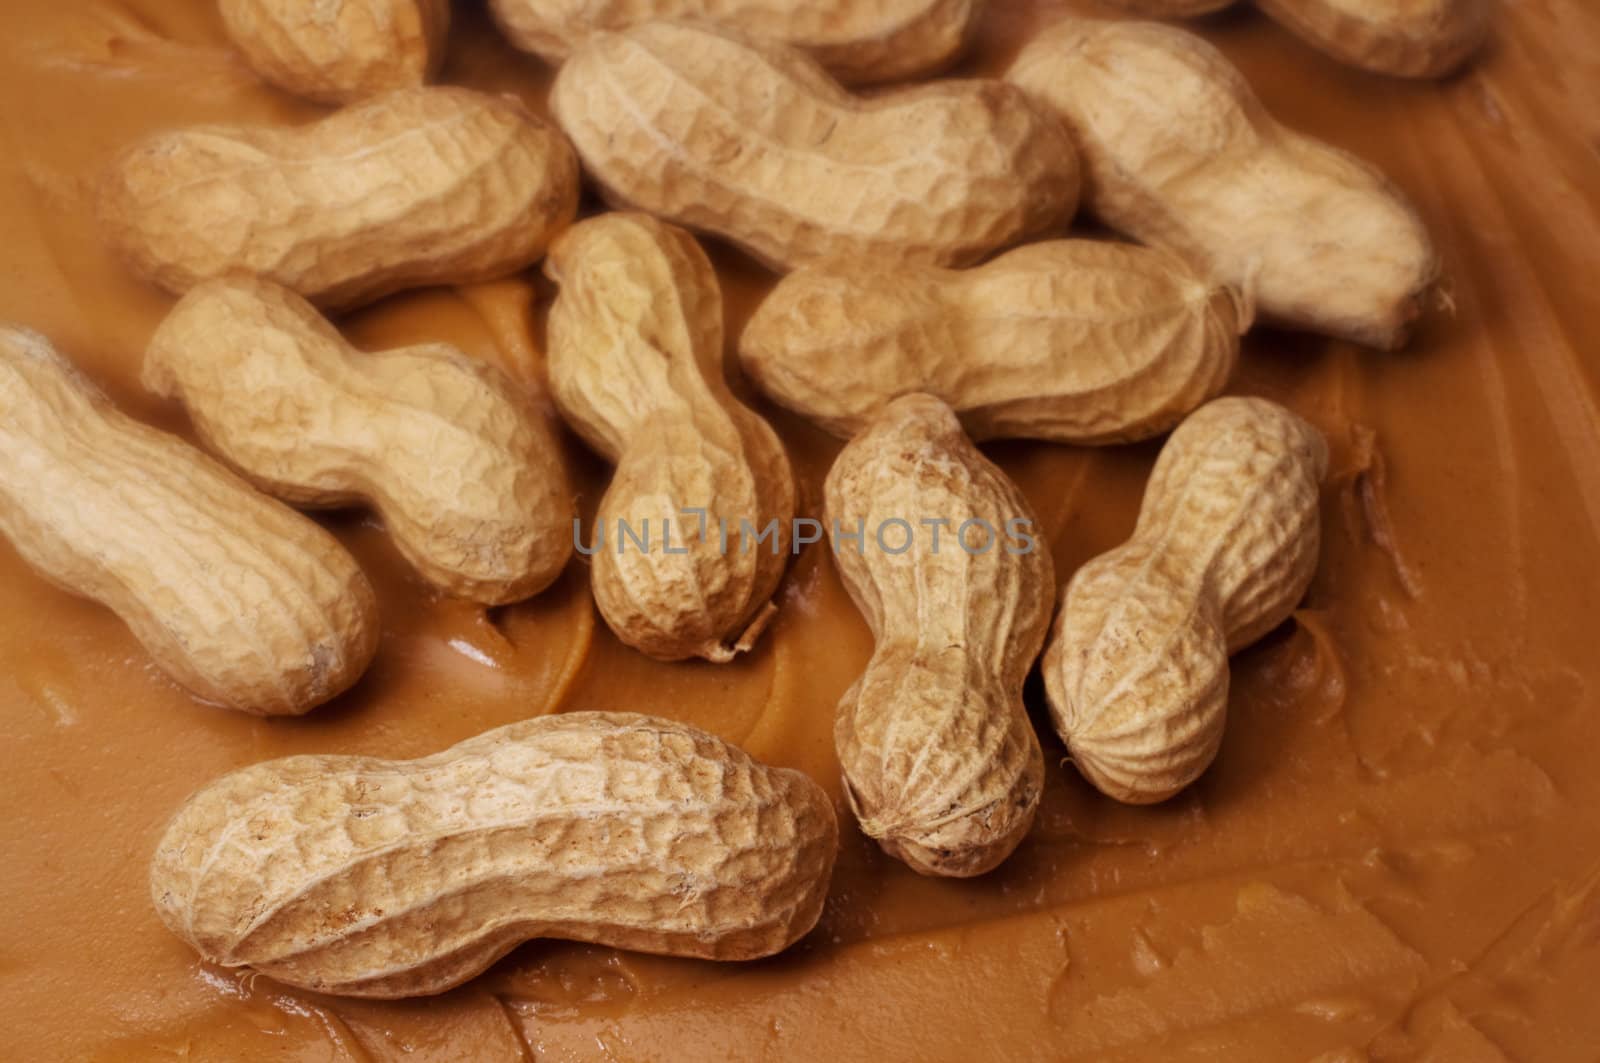 Raw Peanuts in Peanut Butter by dehooks